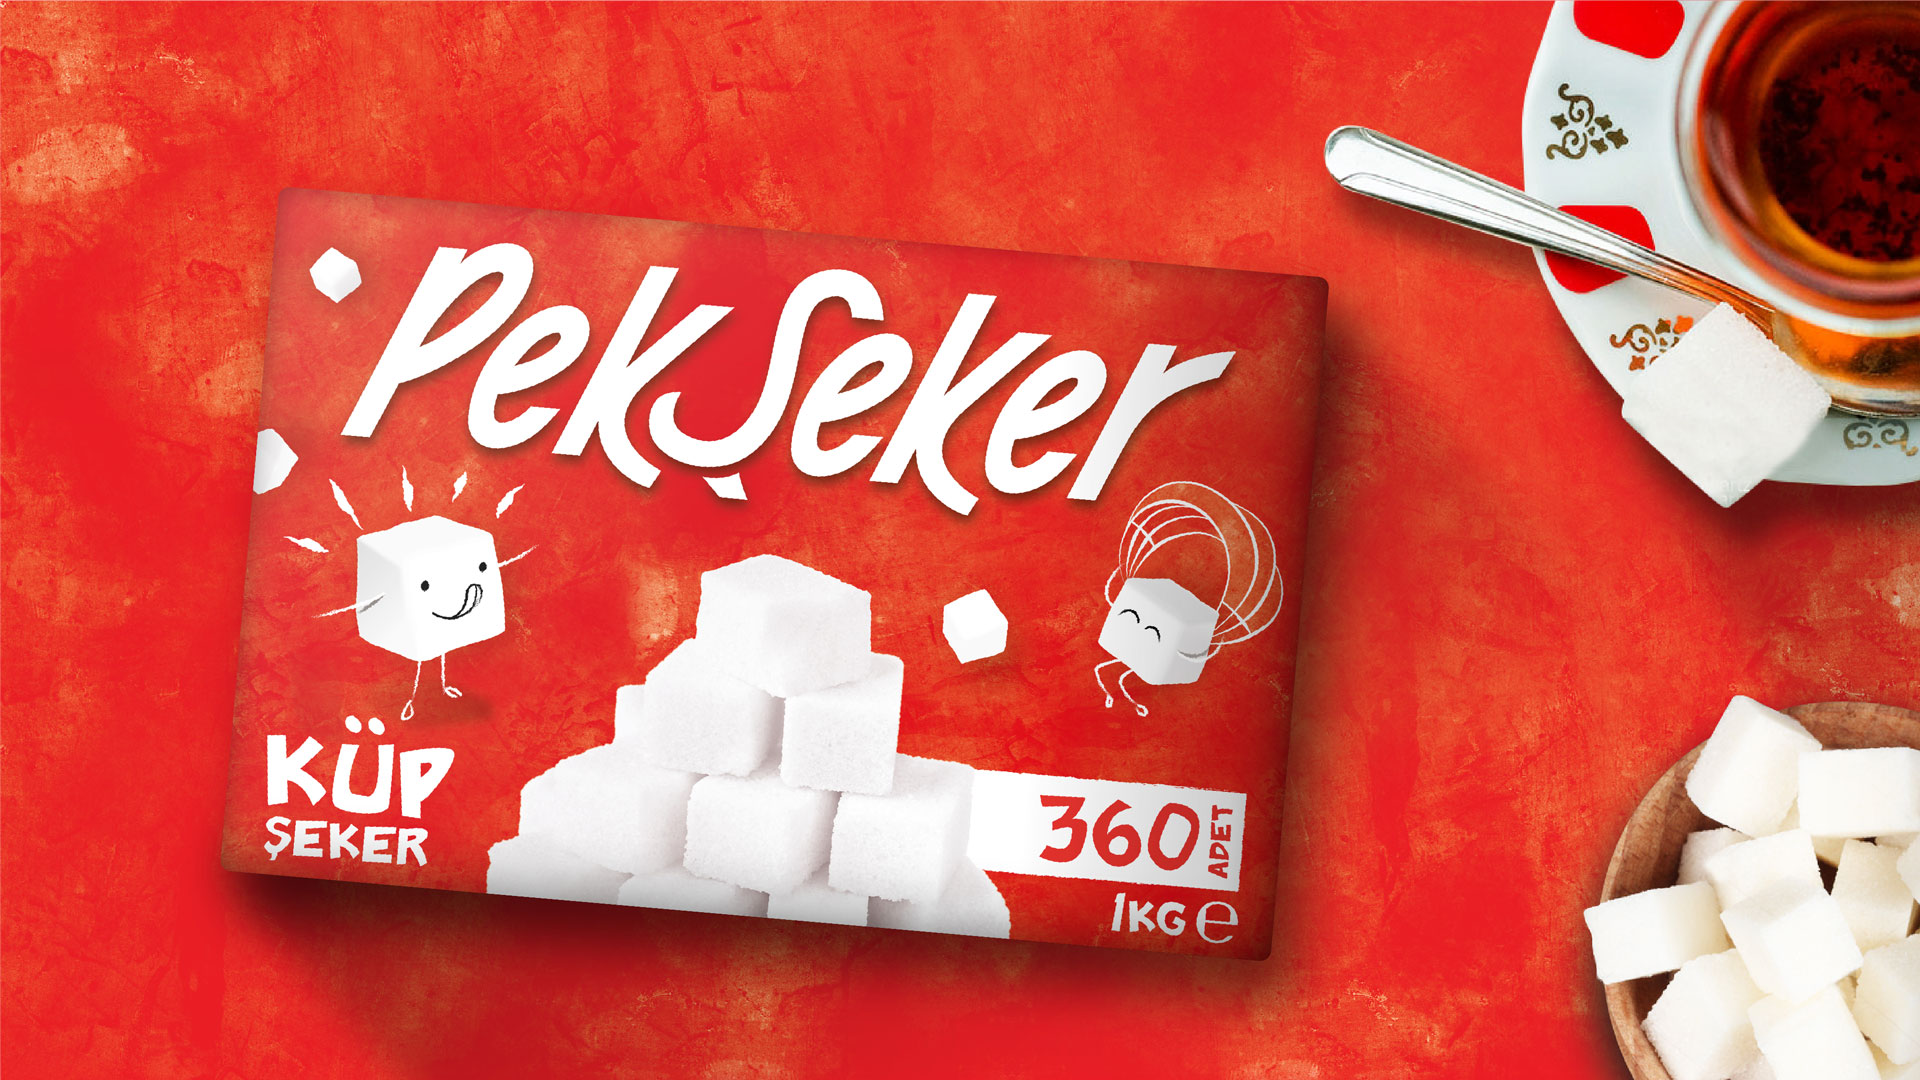 Pekseker Brand Re-design